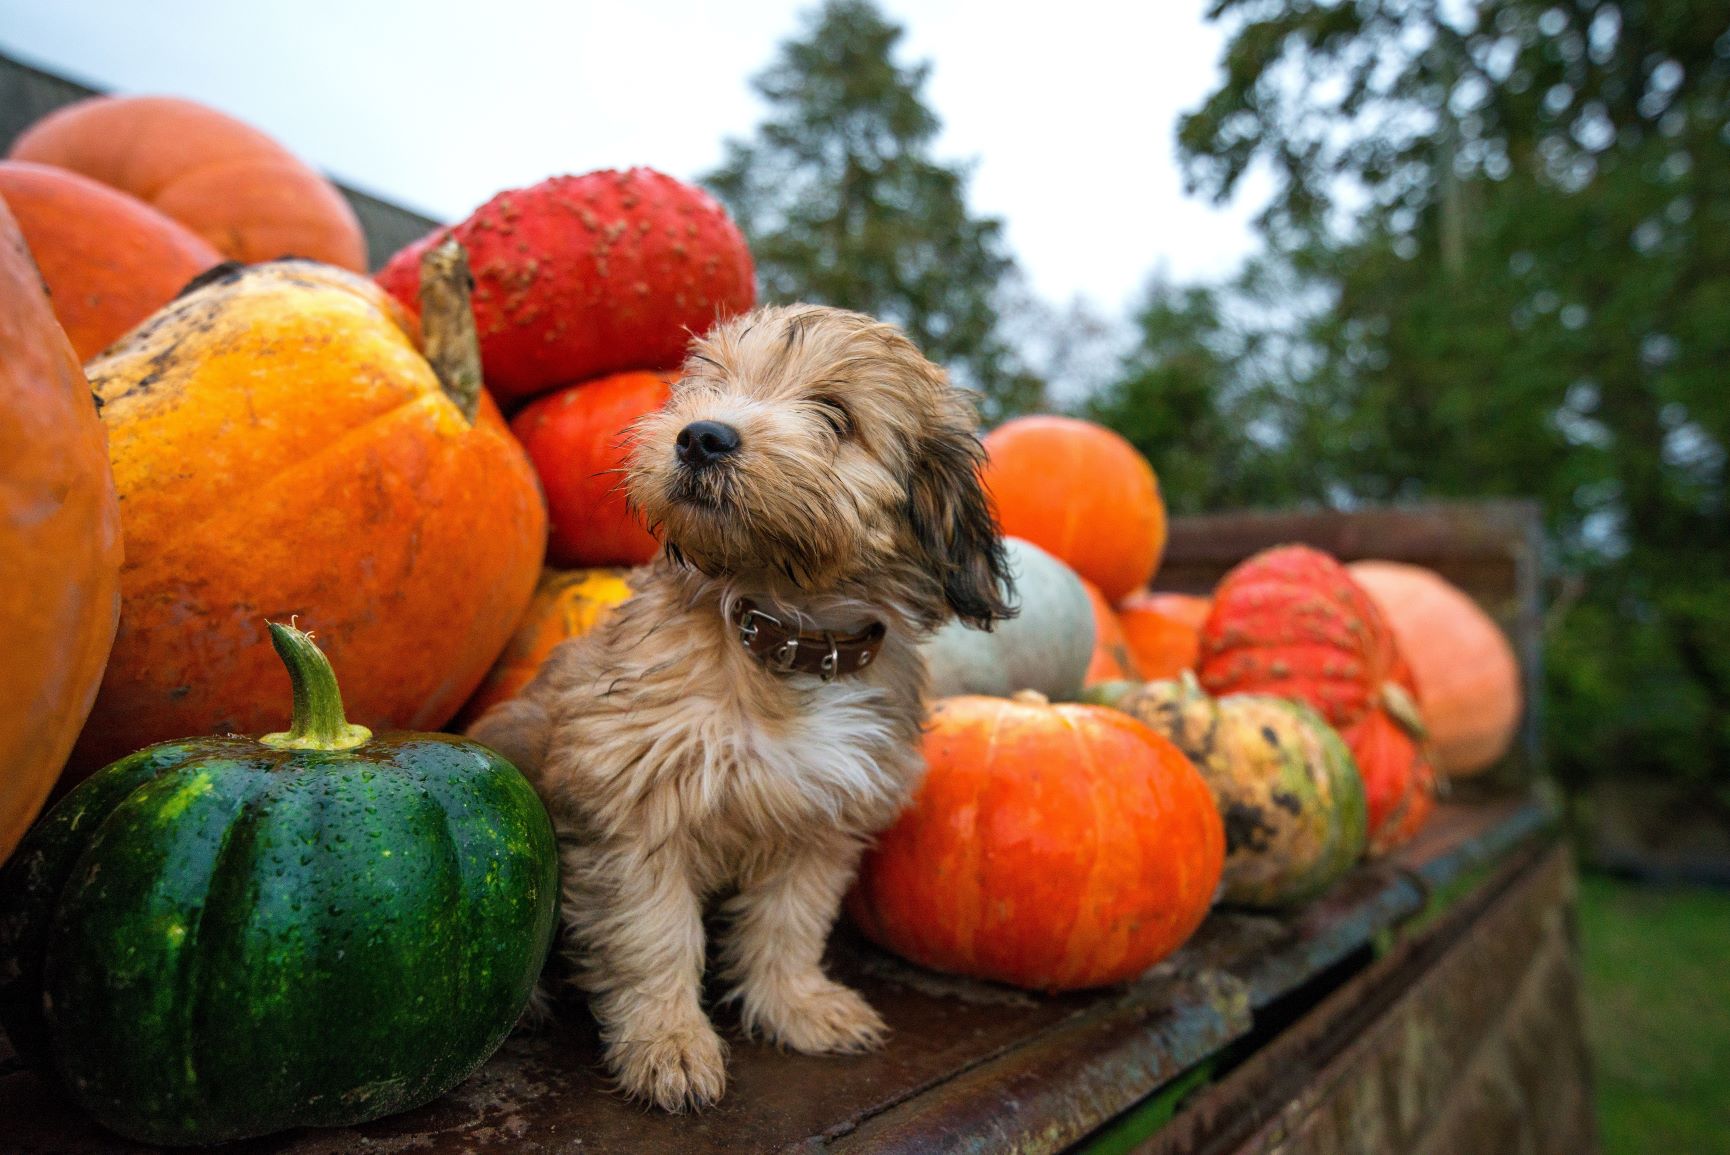 Cute tiny dog outside around pumpkins in the autumn season